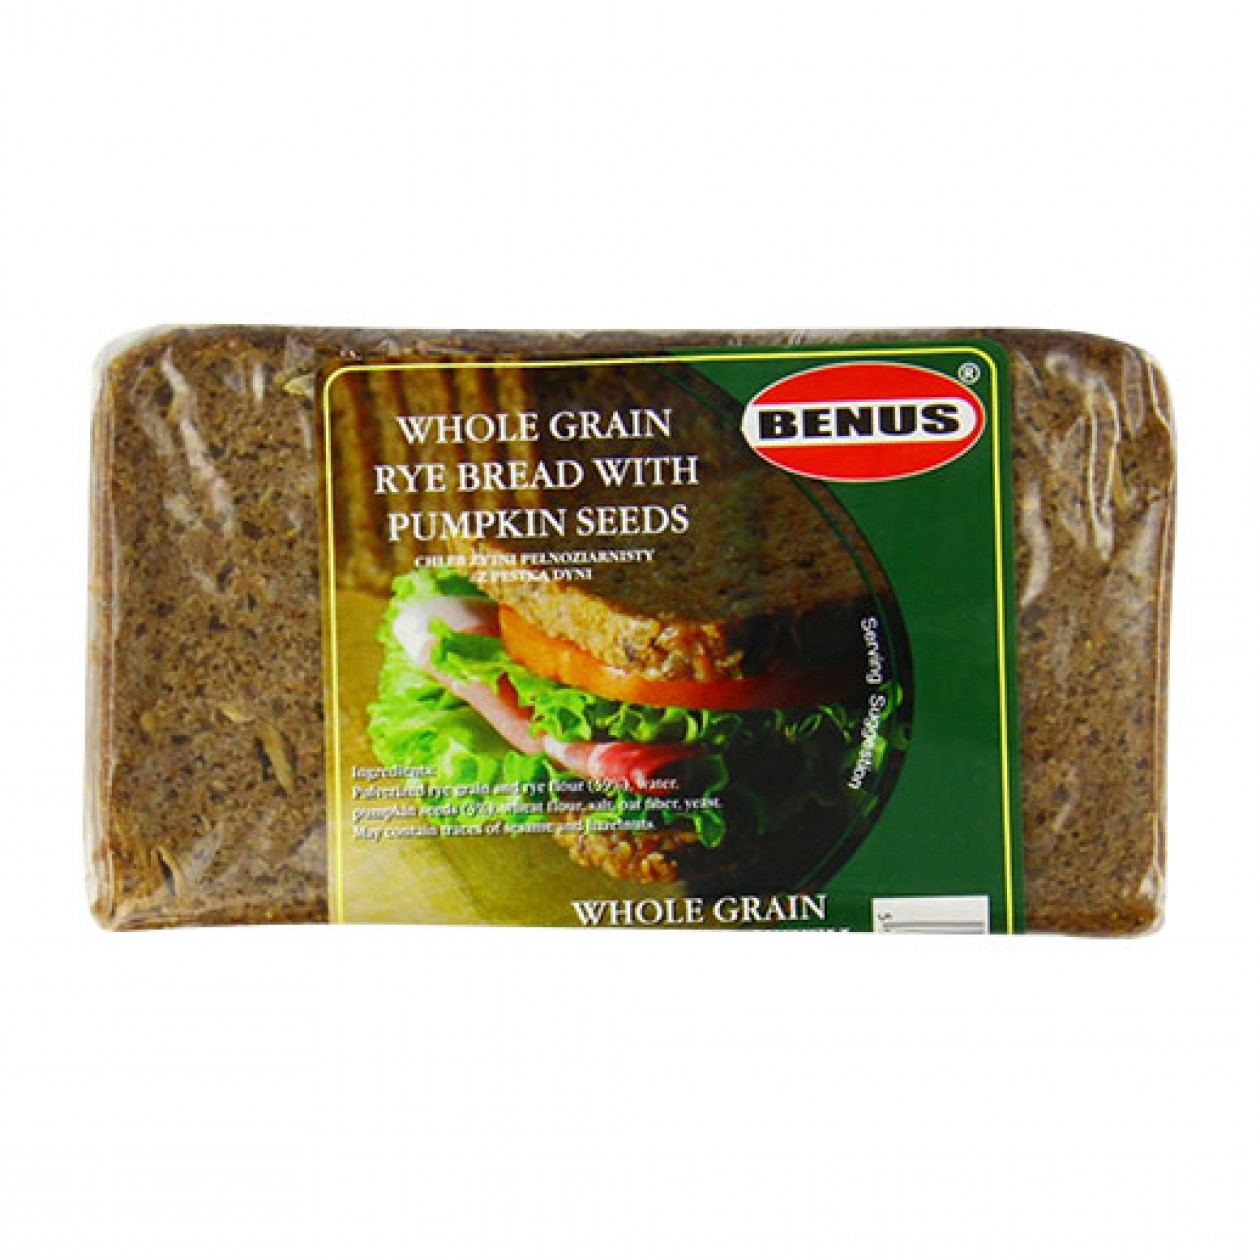 Benus Whole Grain Rye Bread With Pumpkin Seeds 12x500g